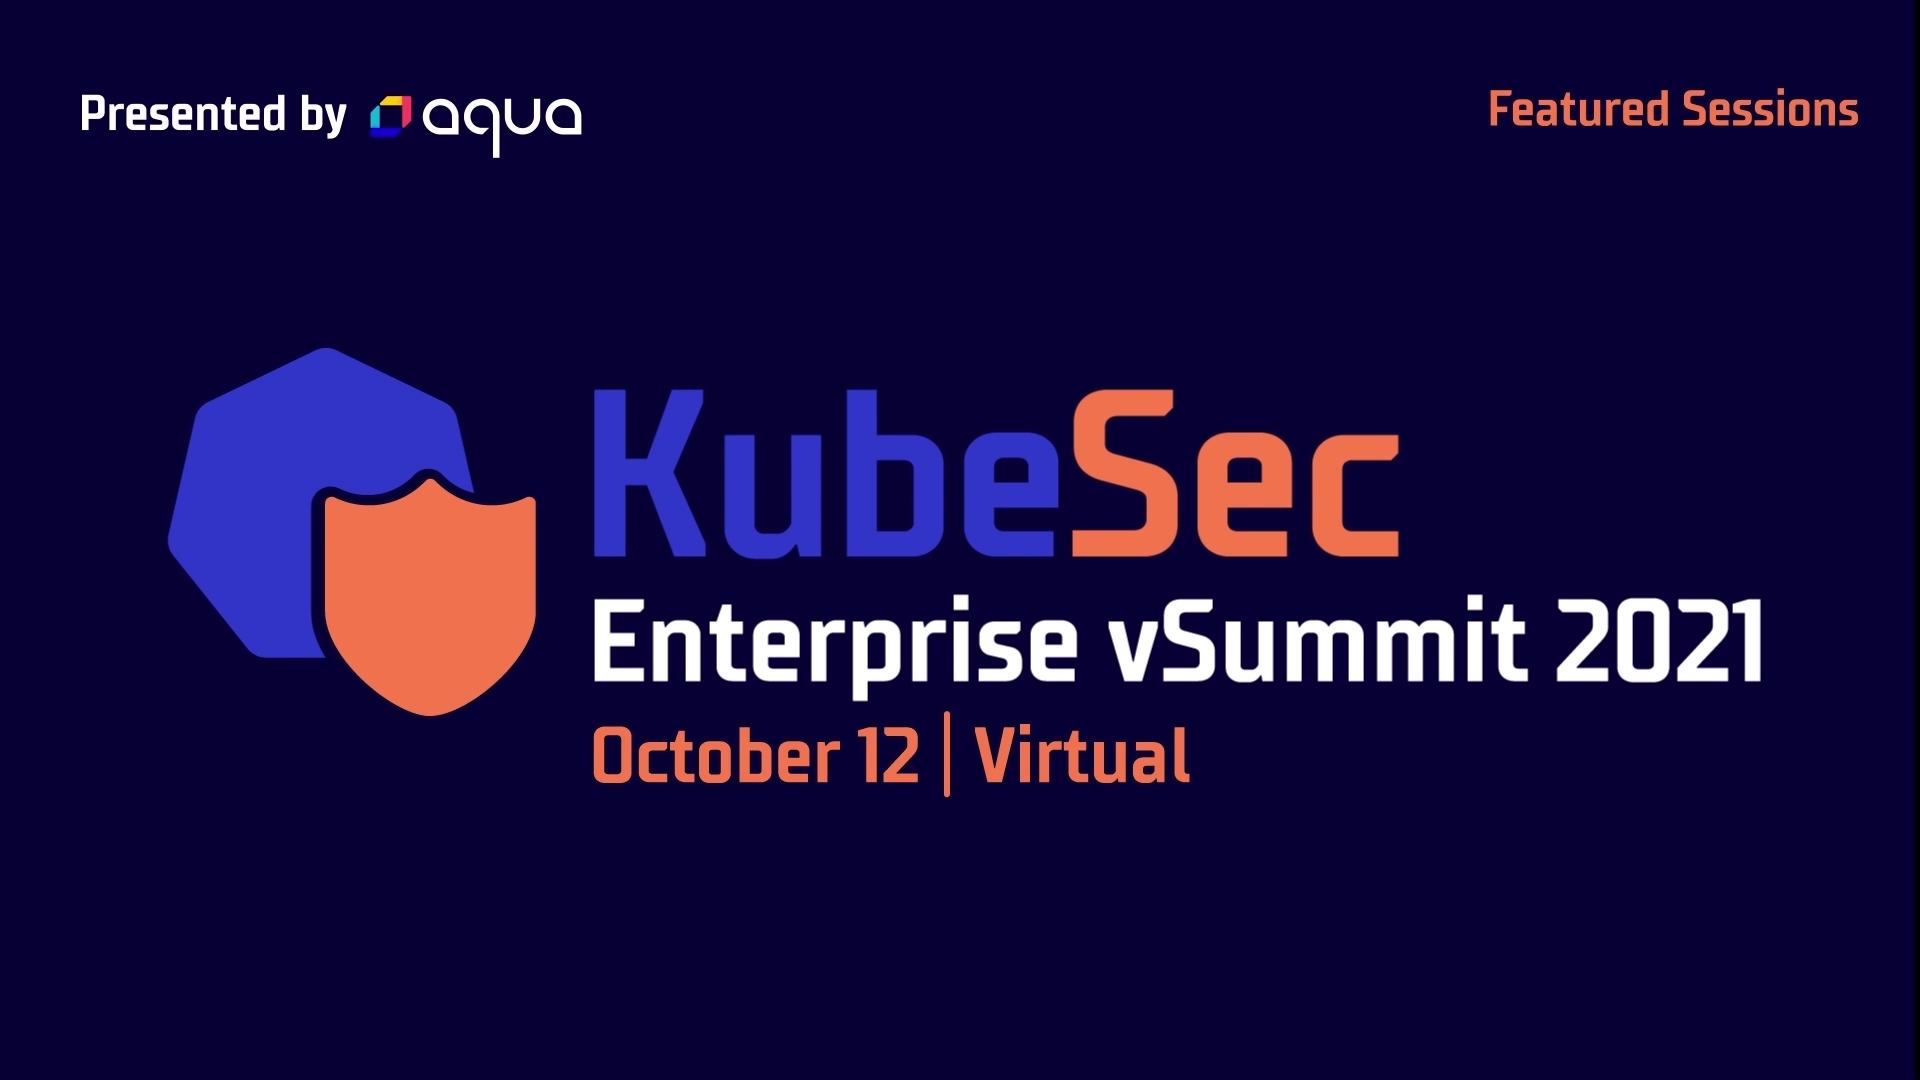 KubeSec Enterprise vSummit - Promo Video 2021